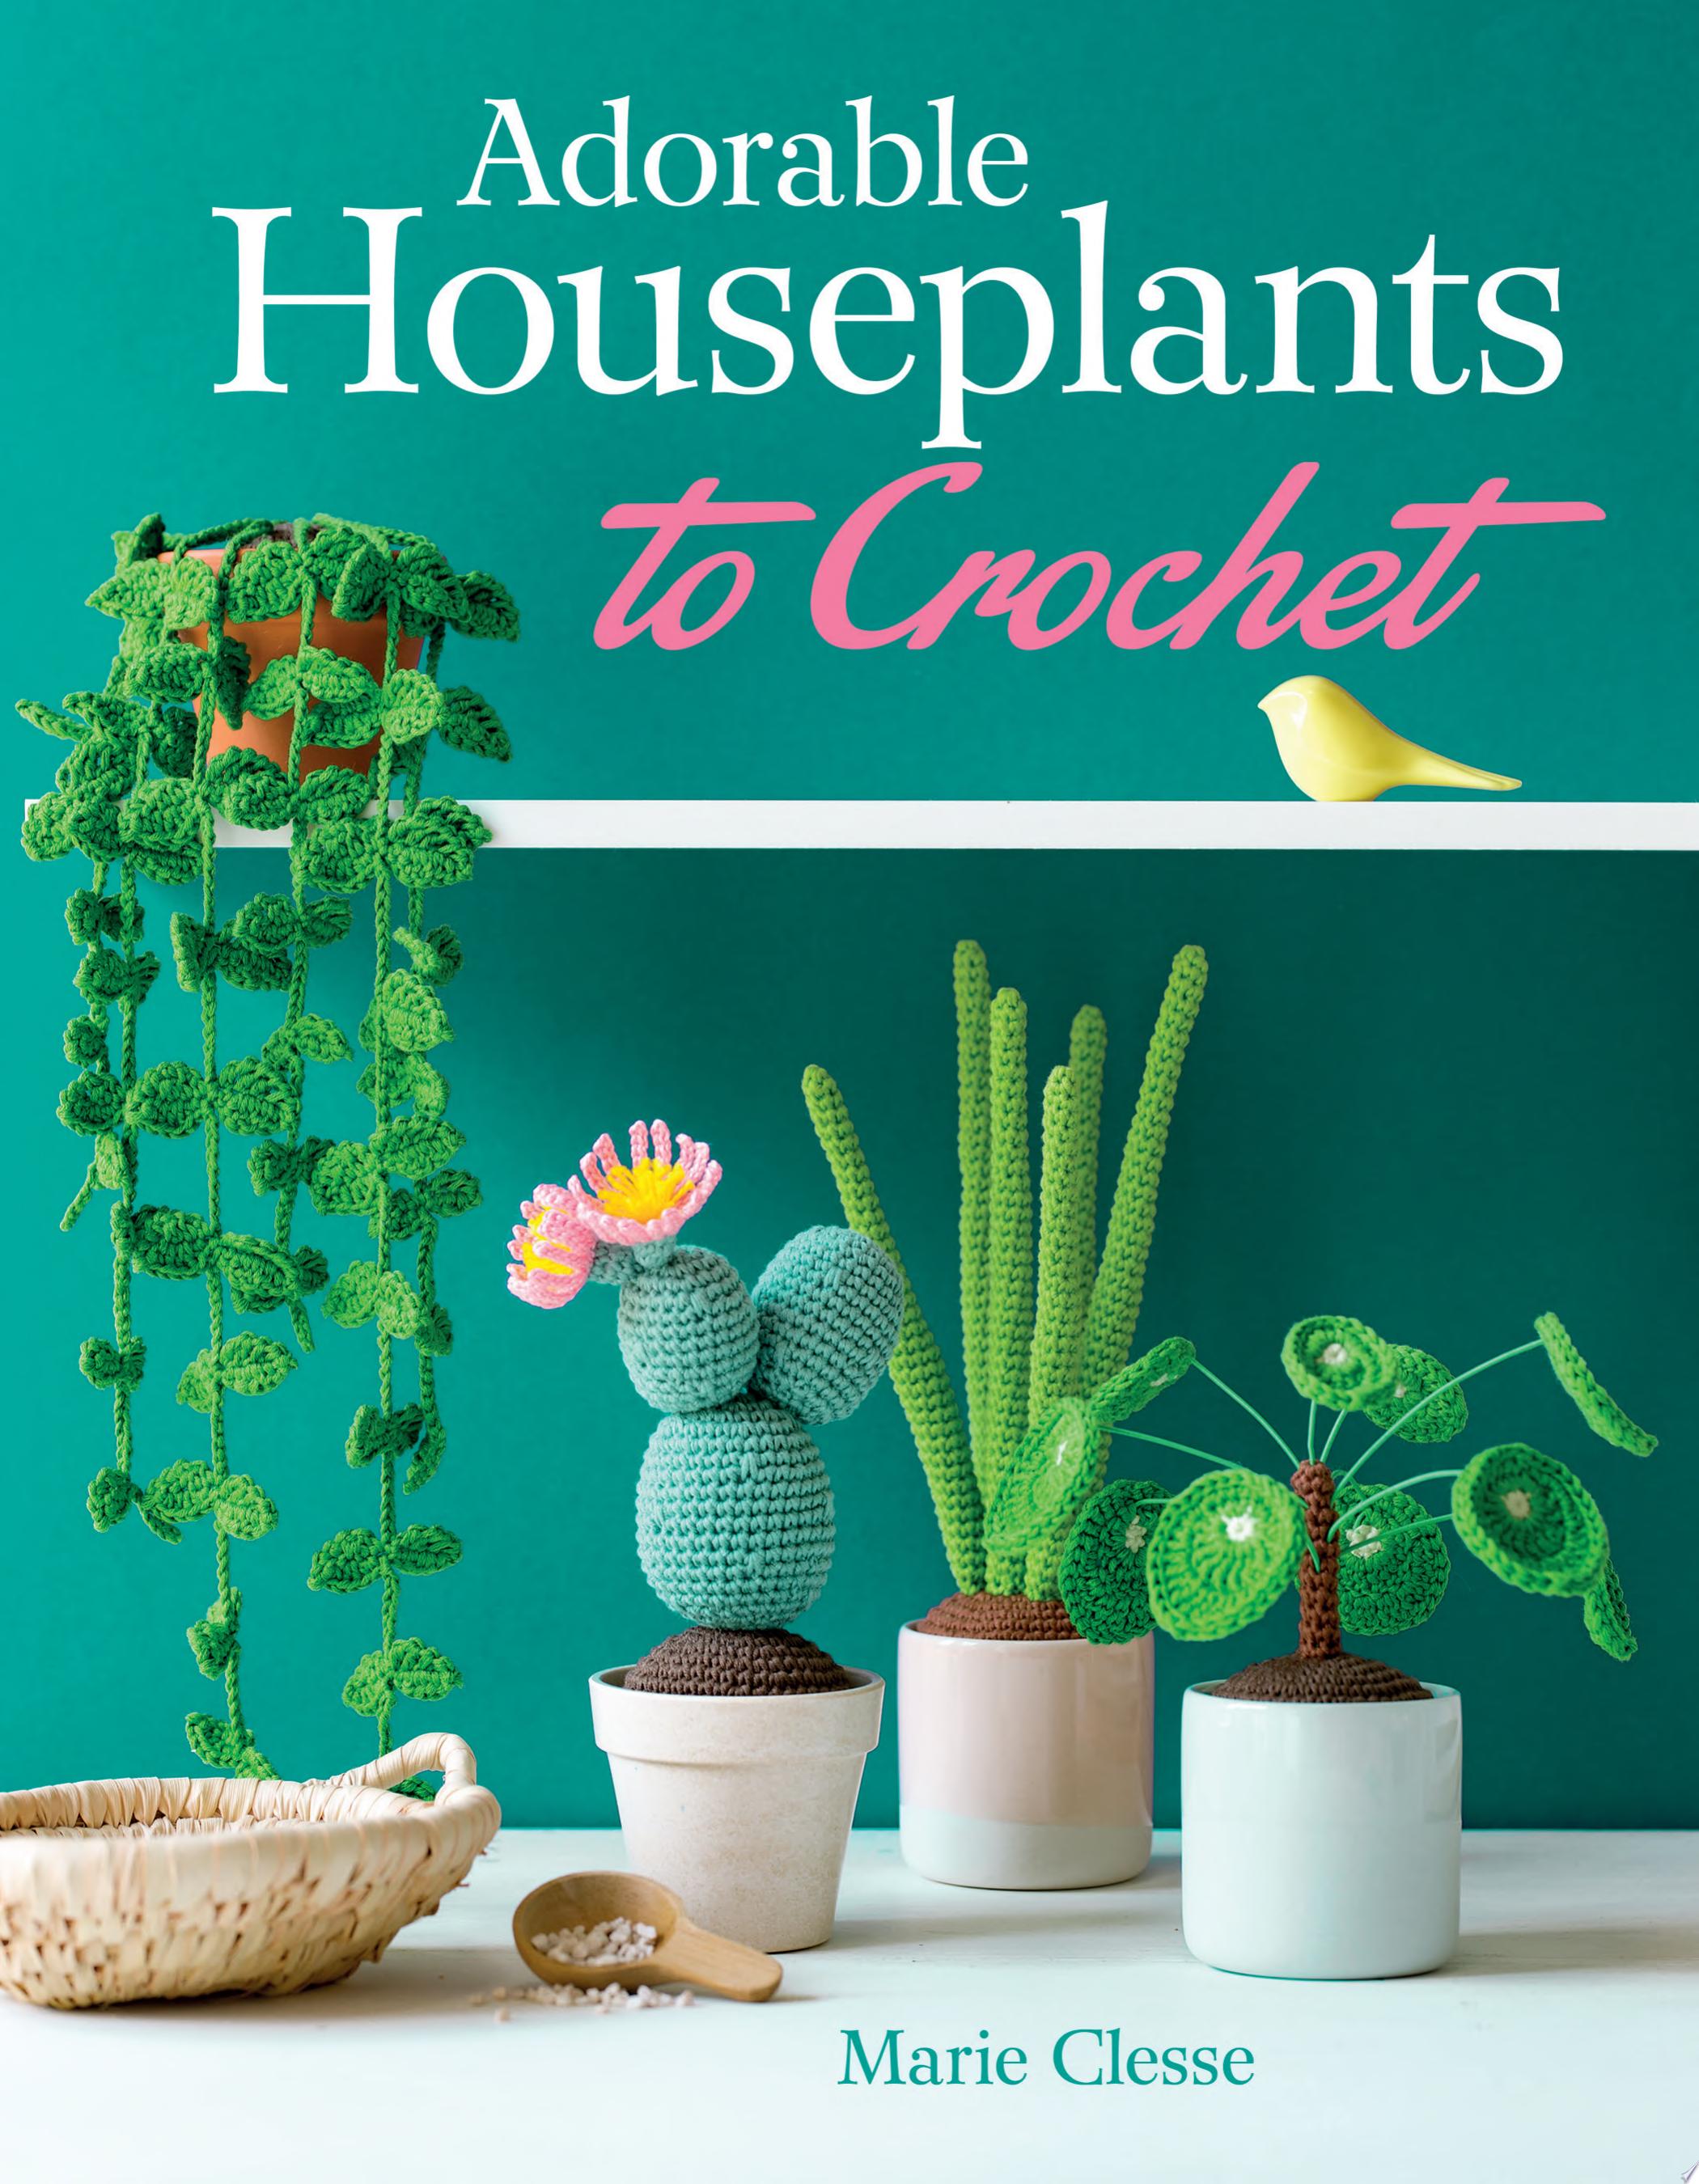 Image for "Adorable Houseplants to Crochet"